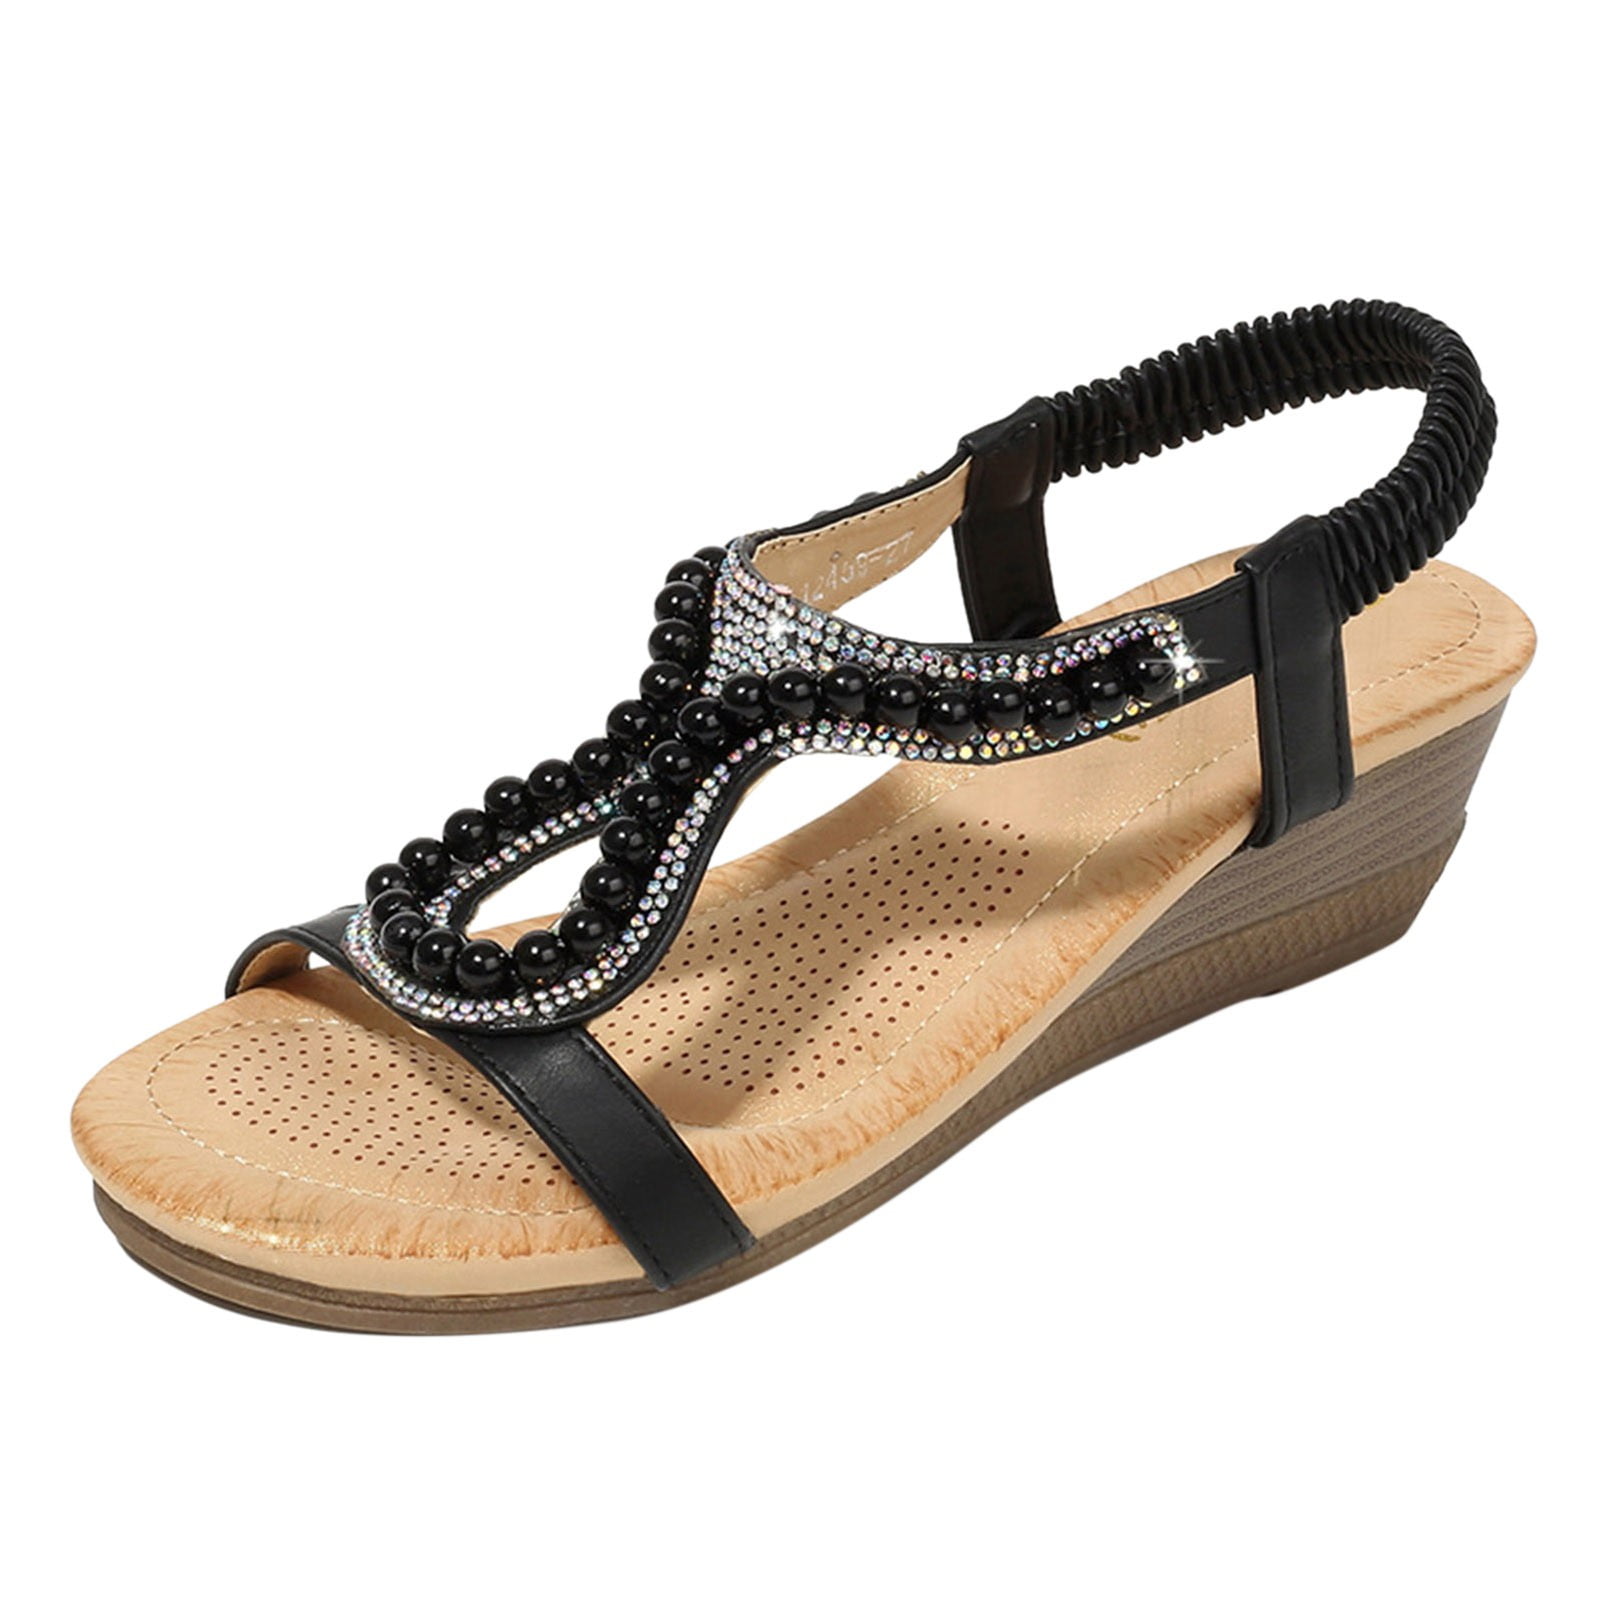 Entyiena Women's Flat Sandals Stappy Comfortable Ankle Elastic T-Strap ...